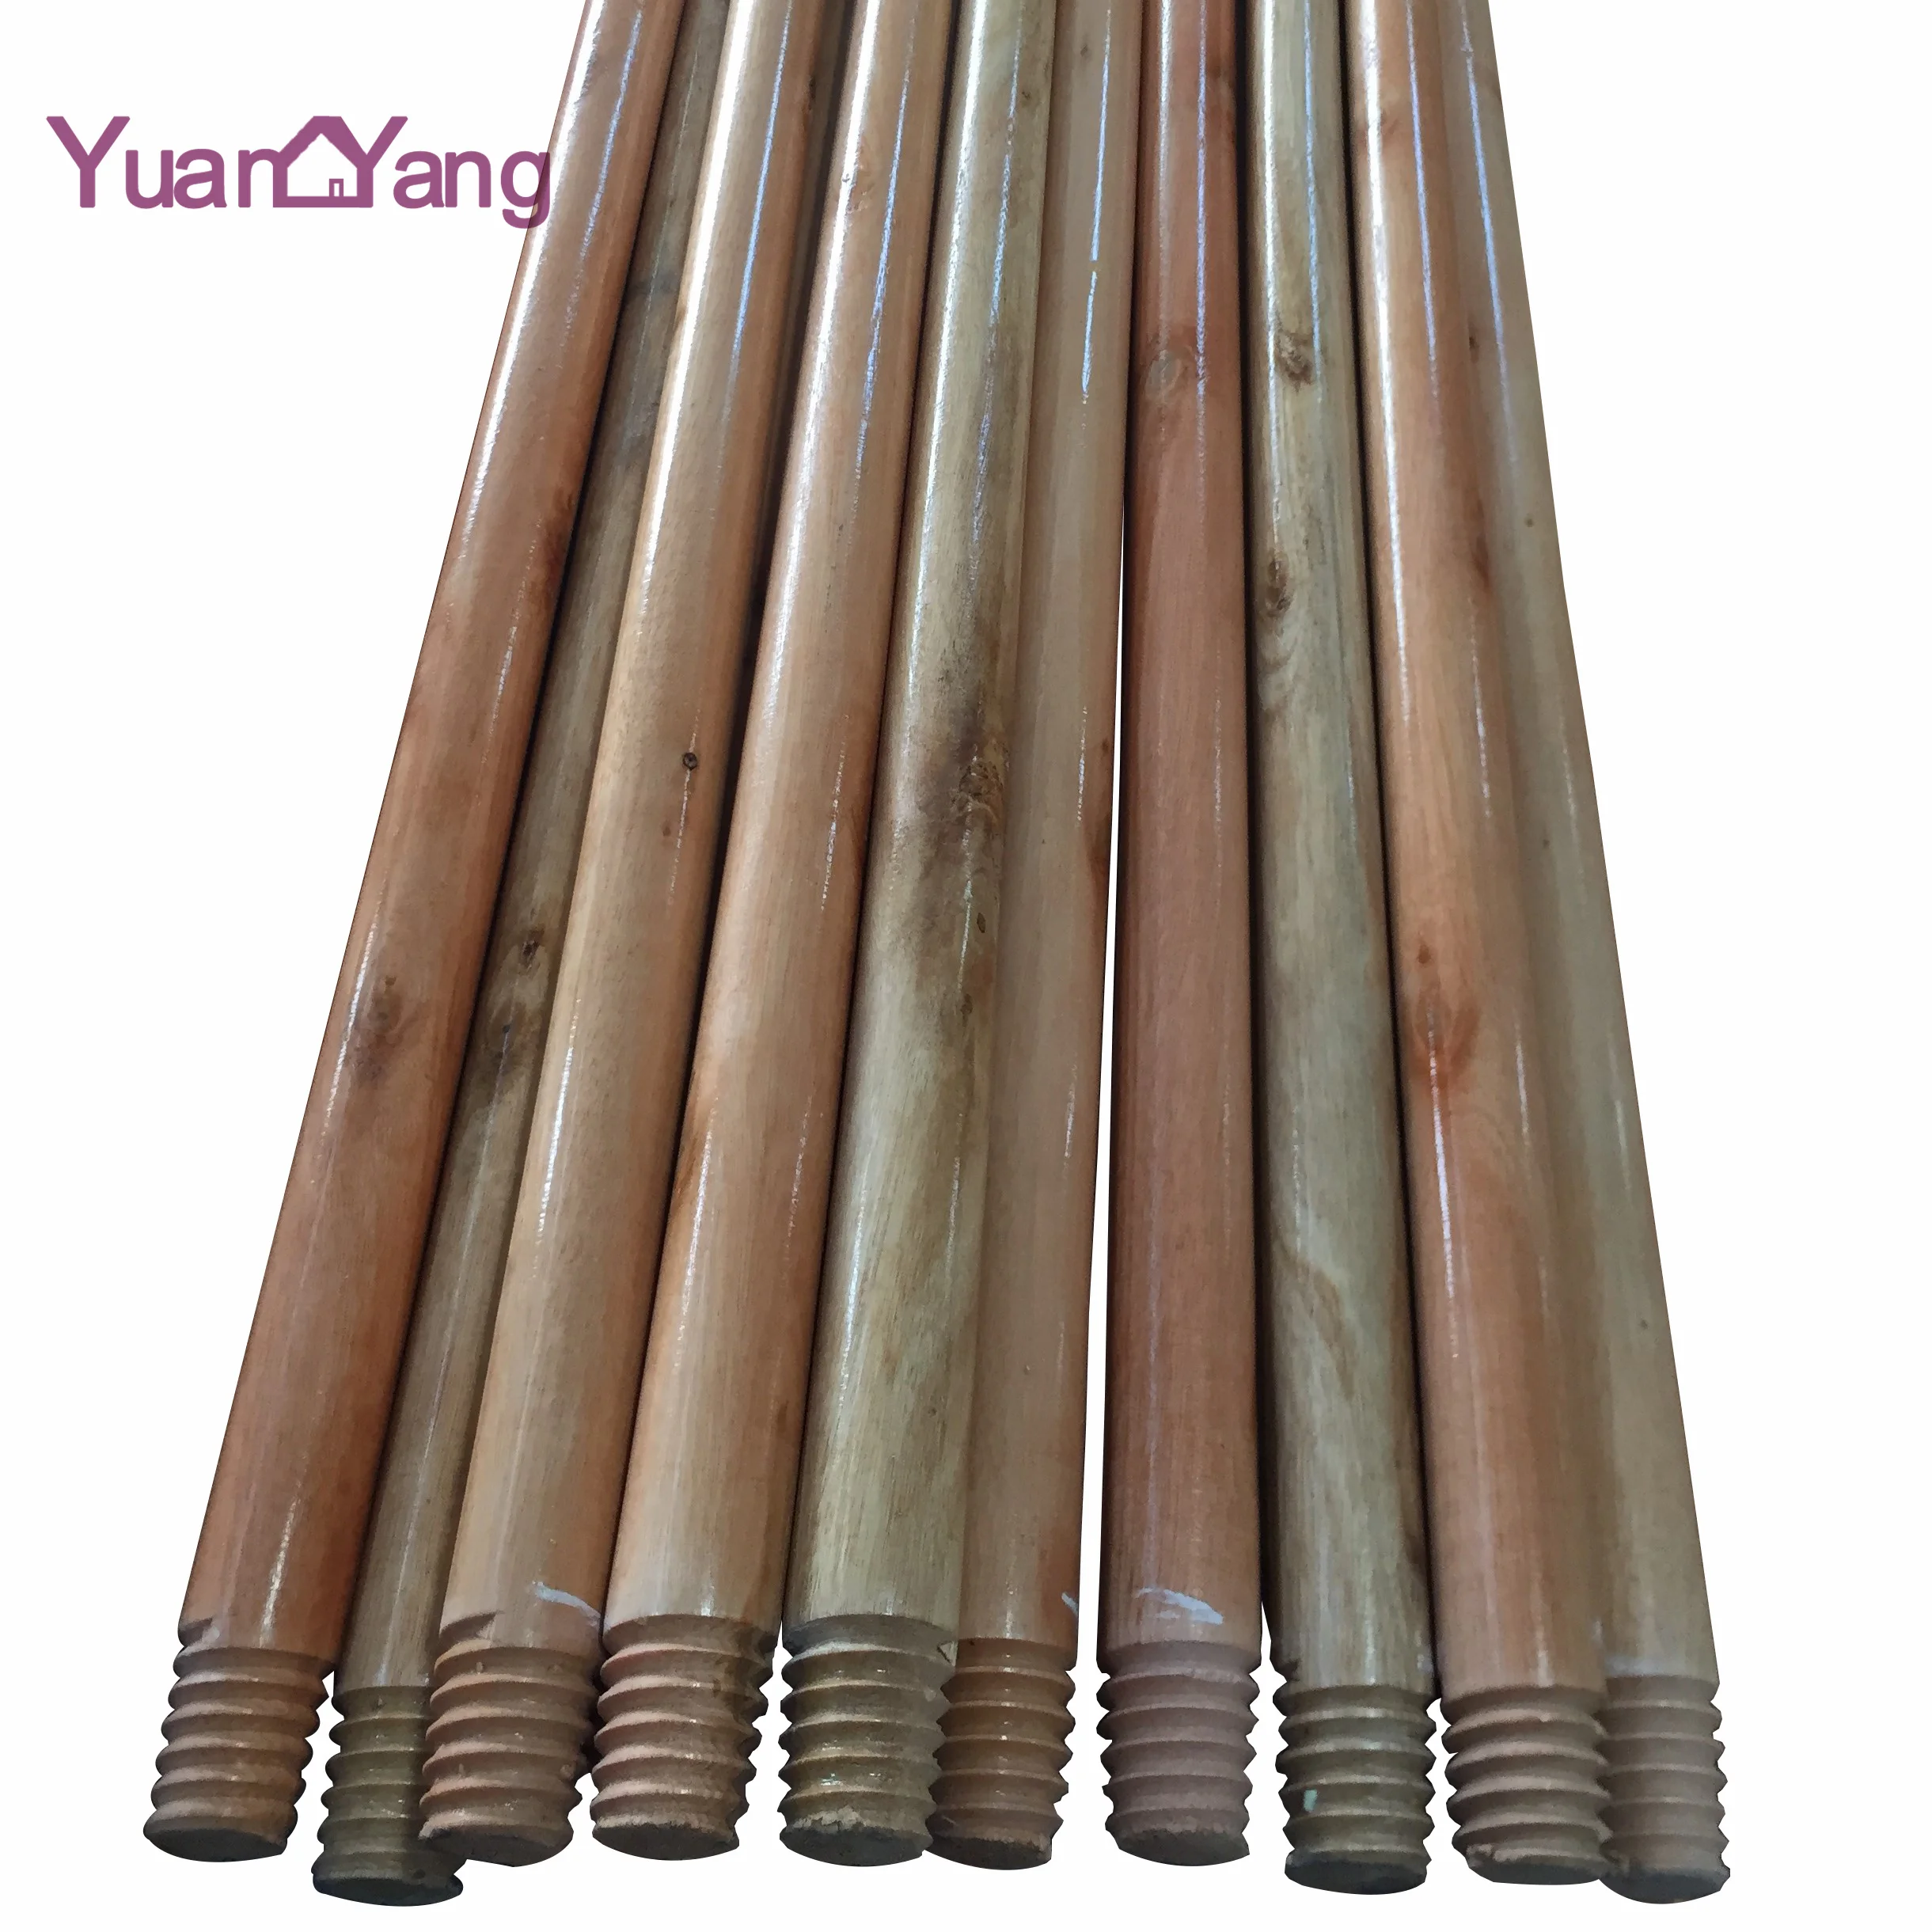 

Top quality varnish wooden broom handle broom sticks wooden poles and sticks for garden